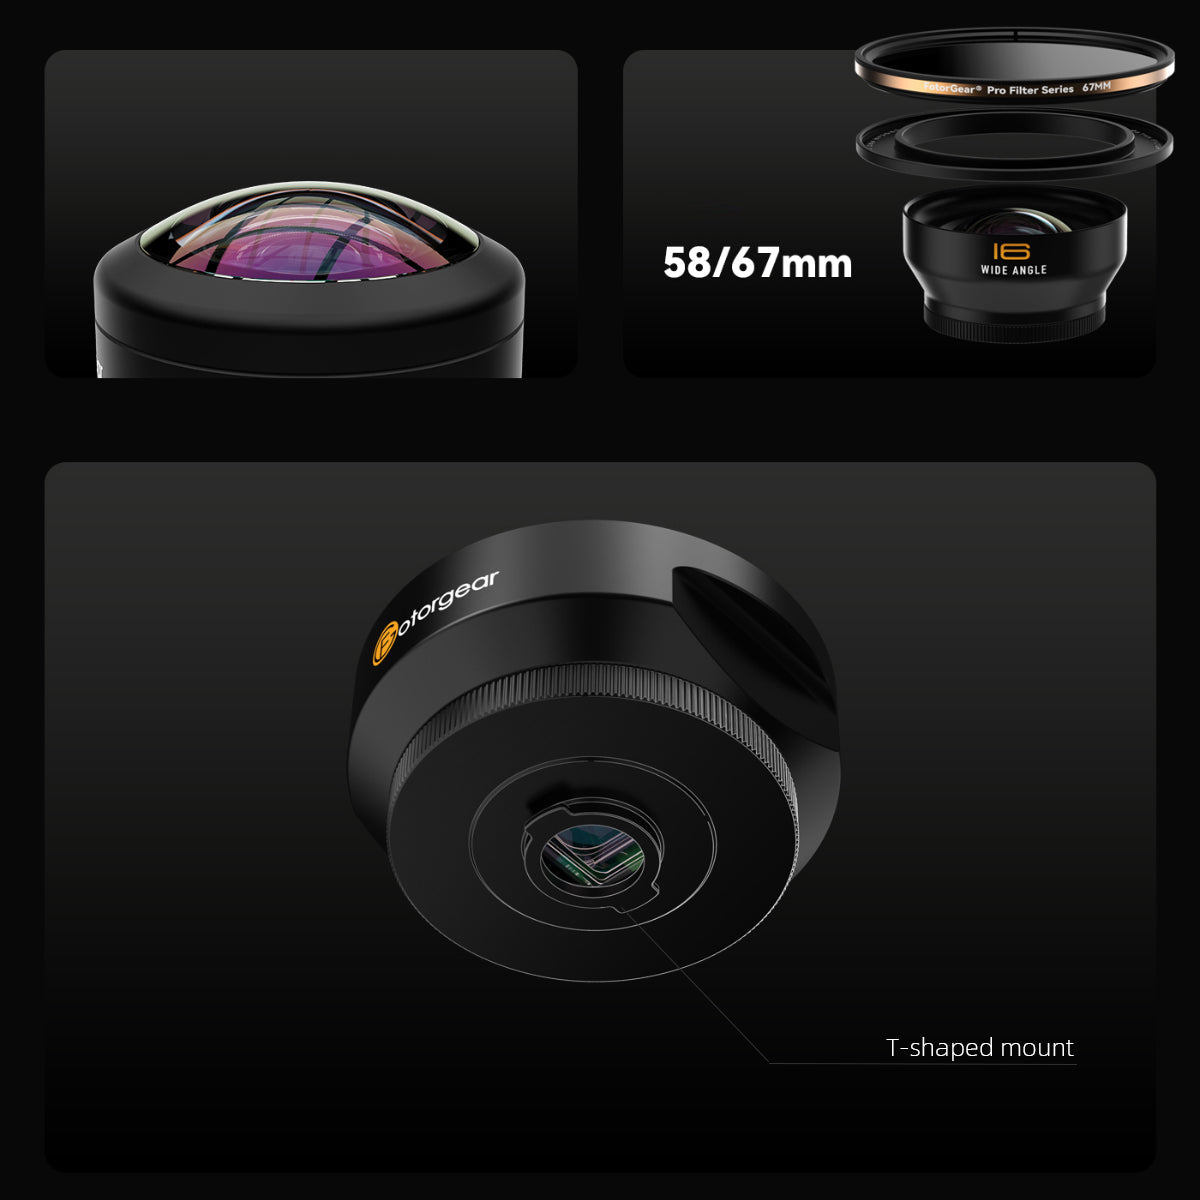 Fotorgear Pro II serial | Phone Lens